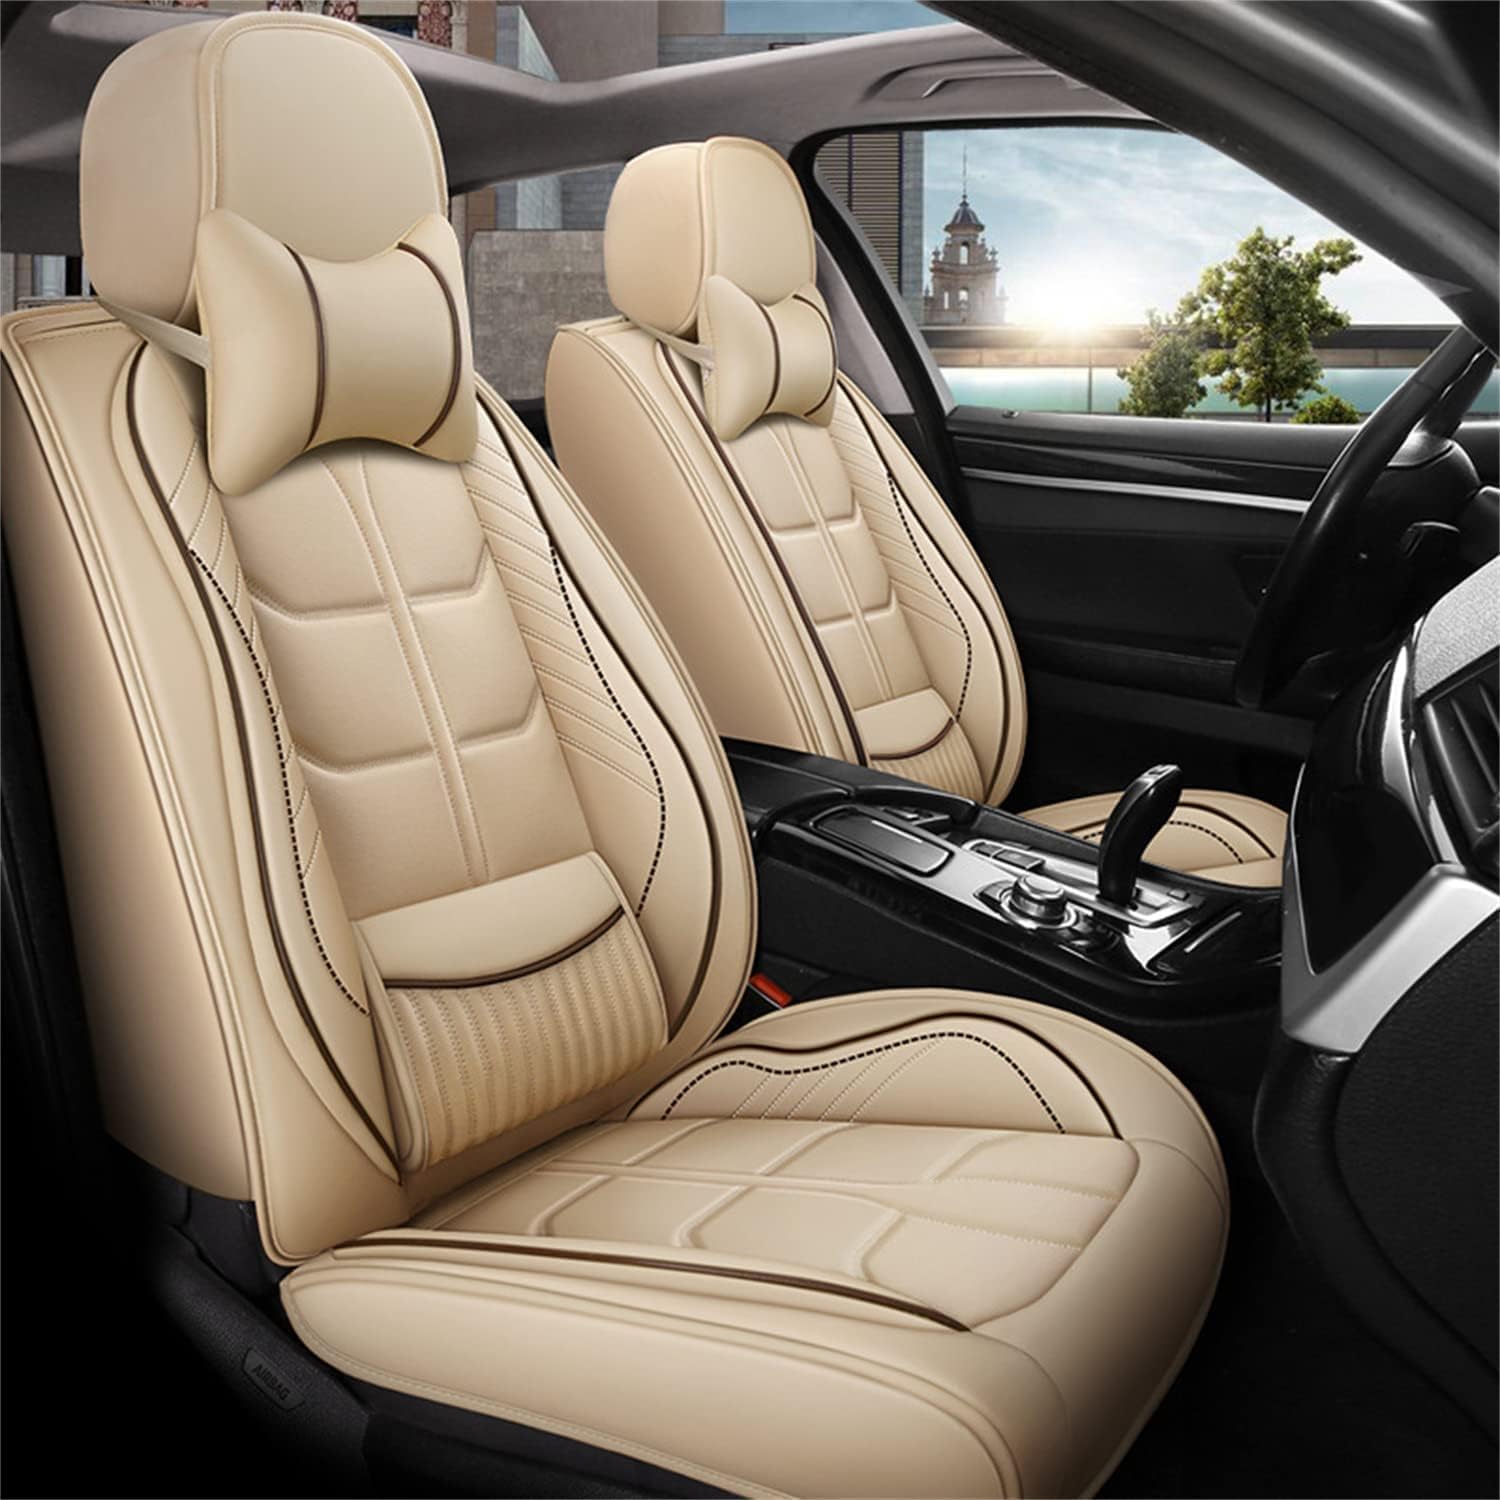 NPORT Auto PU-Leder Sitzbezüge Sets für Toyota Hilux (AN120/AN130) 8.Gen 2015-present, Komfortabler Dauerhafter Sitzbezug Vordersitze Rücksitze Autositzschoner,A/Beige-Withpillow von NPORT